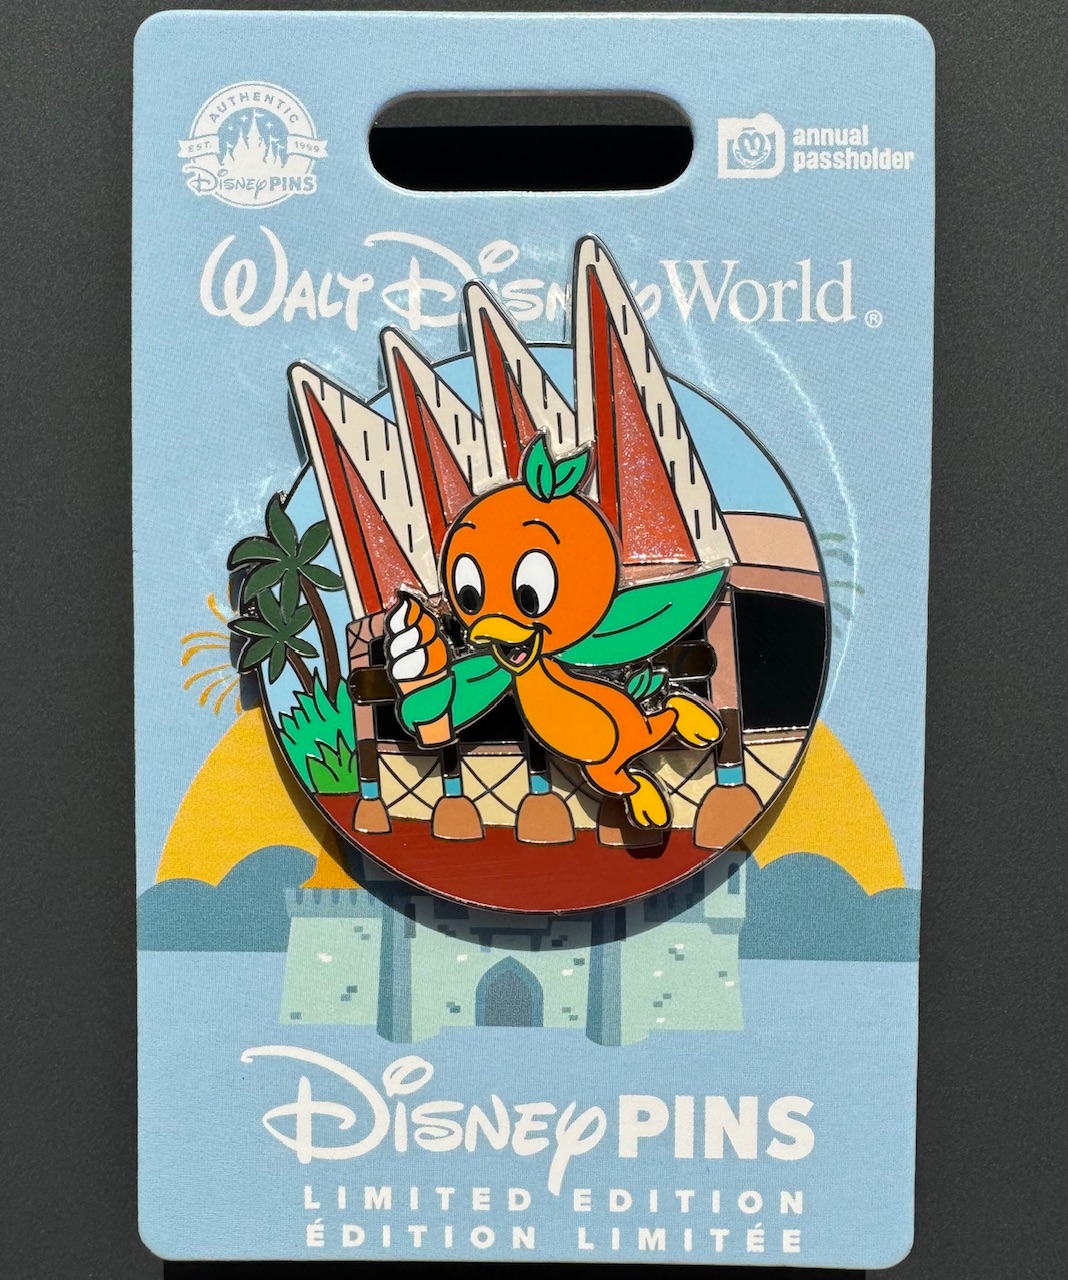 New Disney Villains Open Edition Pins at Disney Parks - Disney Pins Blog